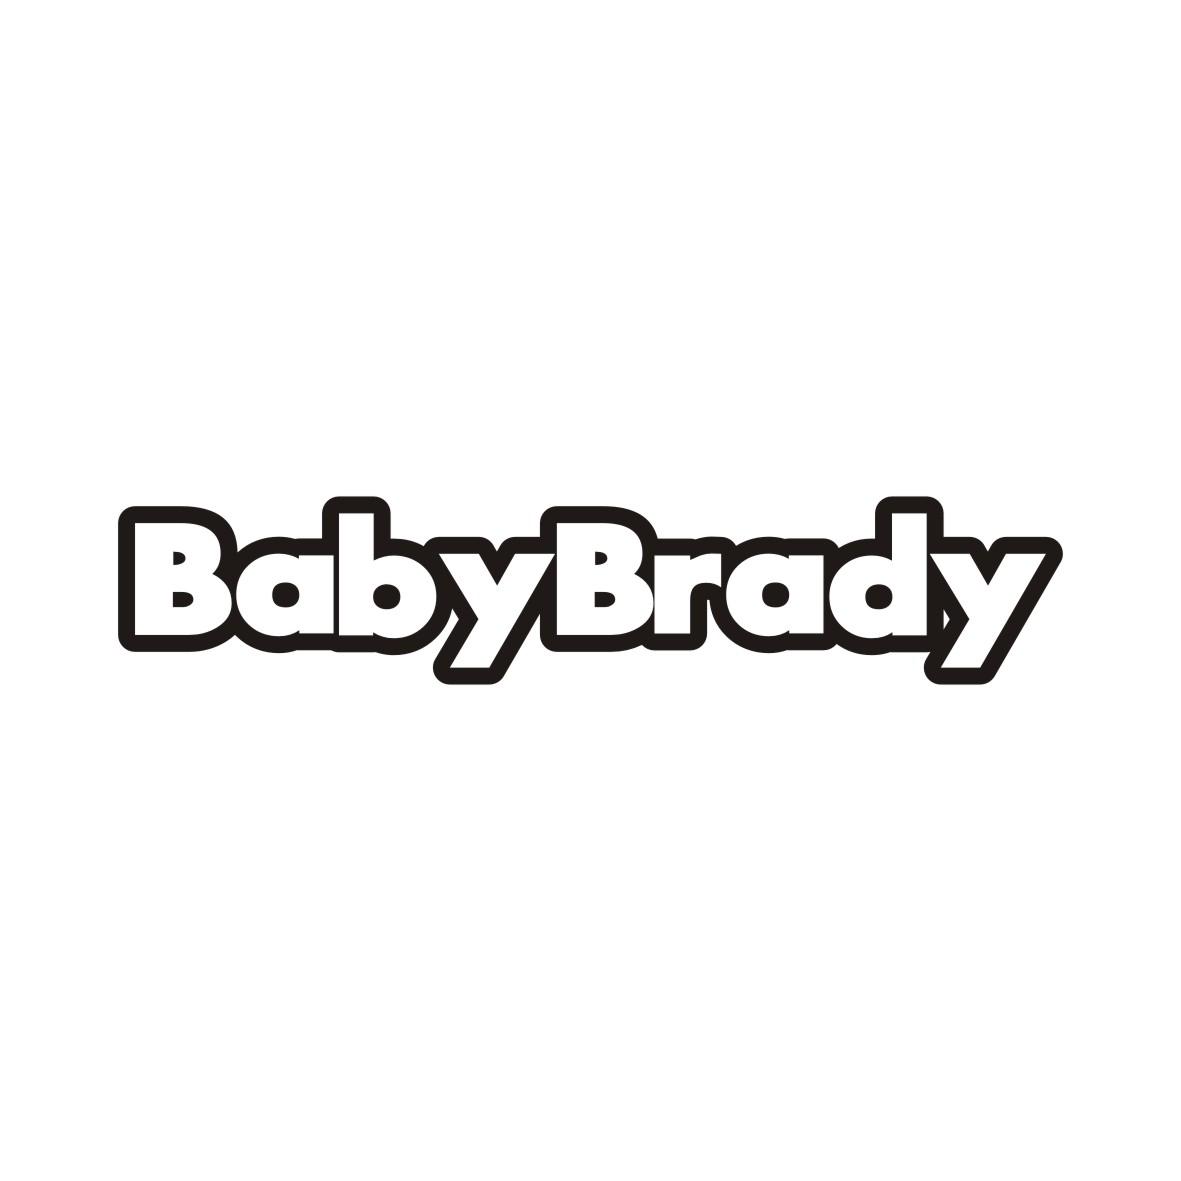 BABYBRADY商标转让